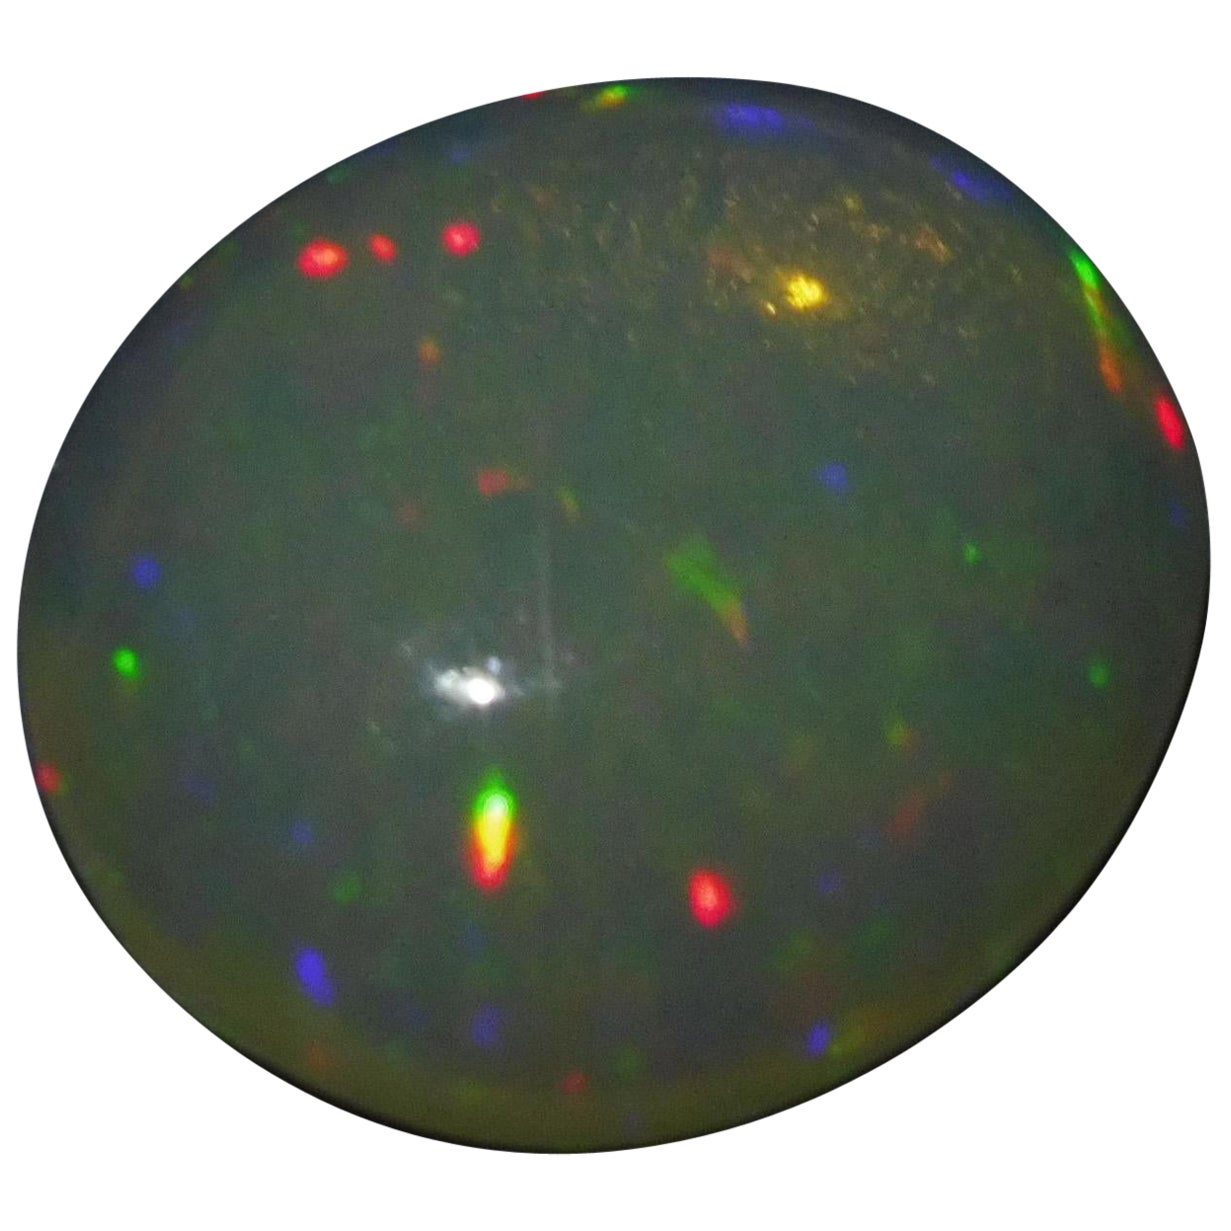 Cabochon ovale 4,89 carats  Opale